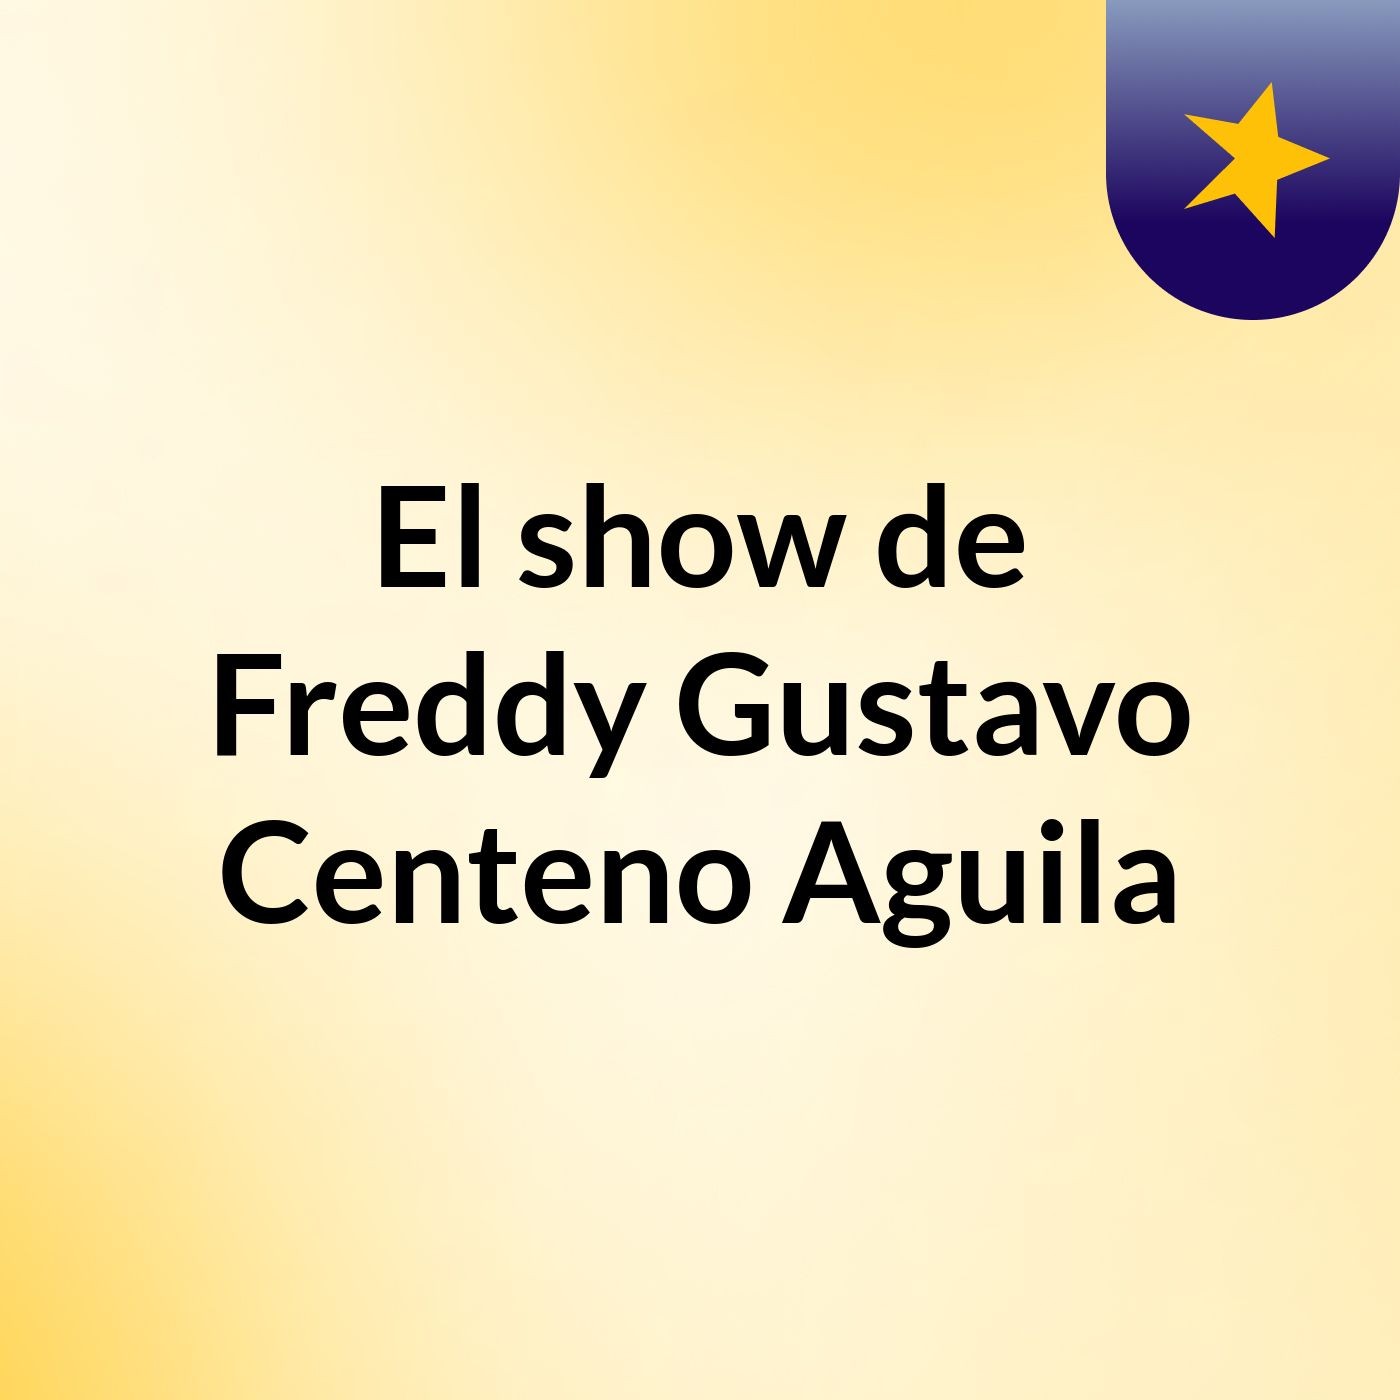 El show de Freddy Gustavo Centeno Aguila